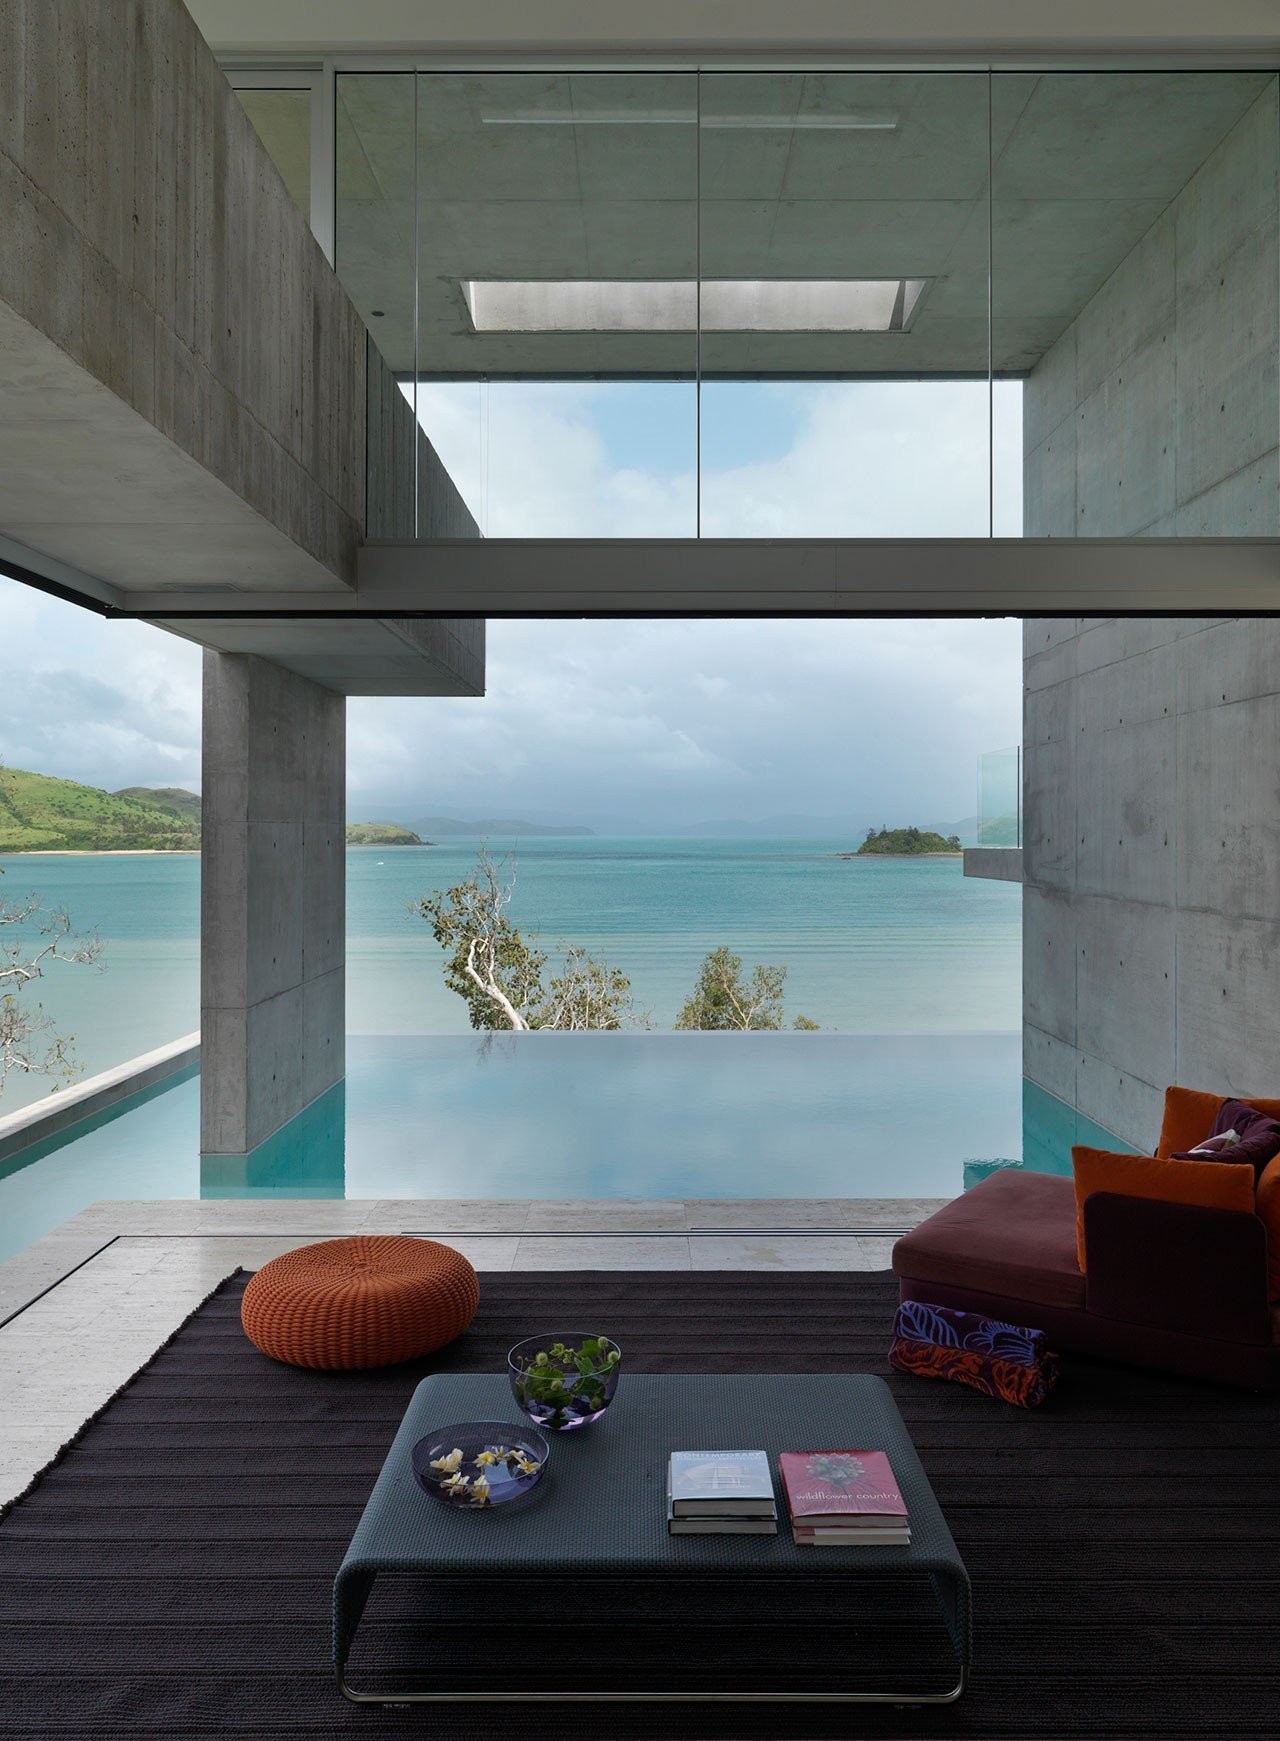 f3-solis-house-hamilton-island-qld-renato-d-ettorre-architects-photo-mads-mogensen-yatzer-U89Ol.jpg